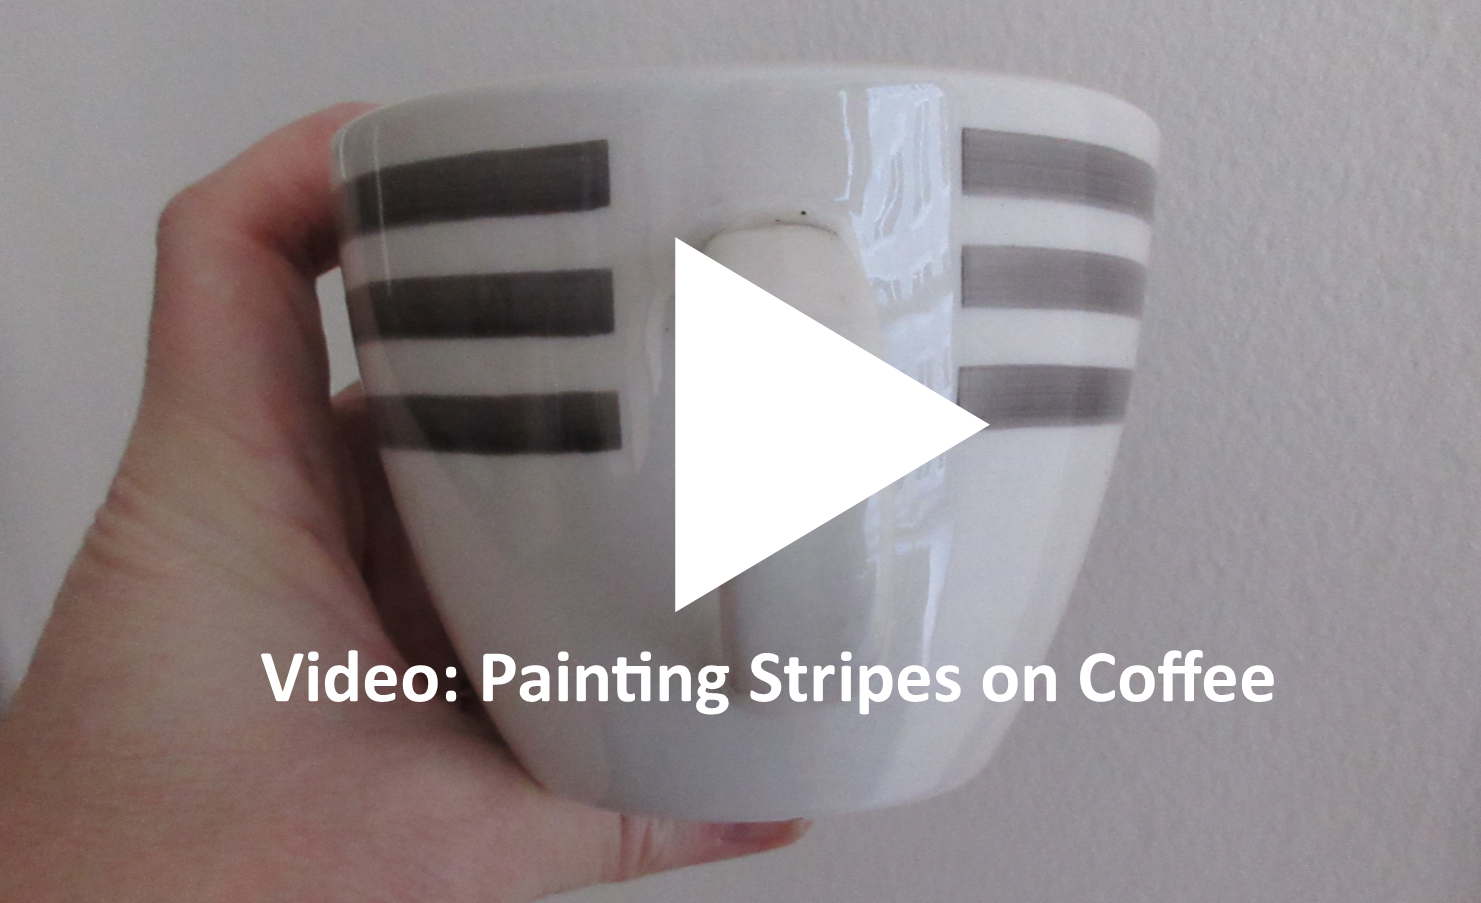 dewitt kendall product development video coffee mugs tabletimes blog